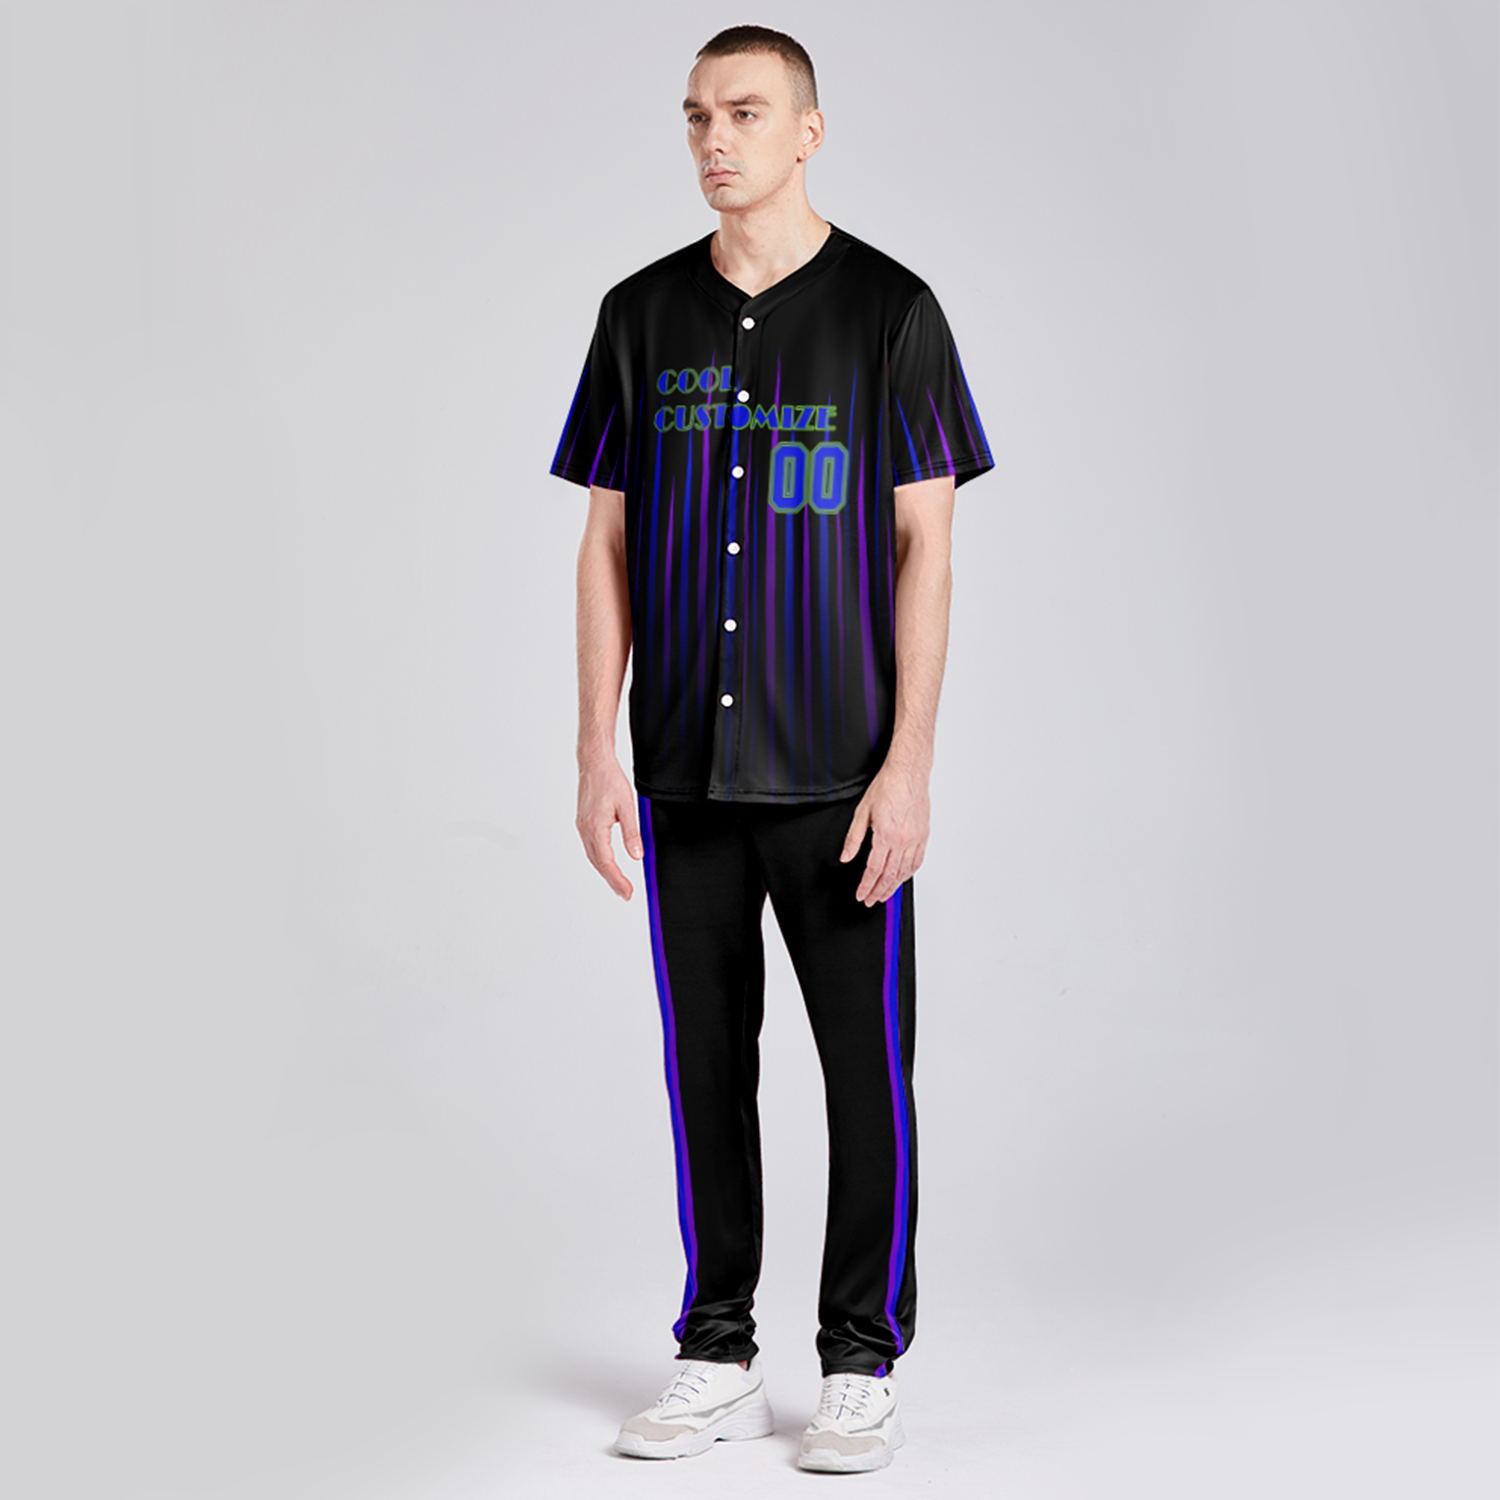 Factory Custom Baseball Shirt Personalized Design Jerseys OEM Print on Demand Baseball Suits